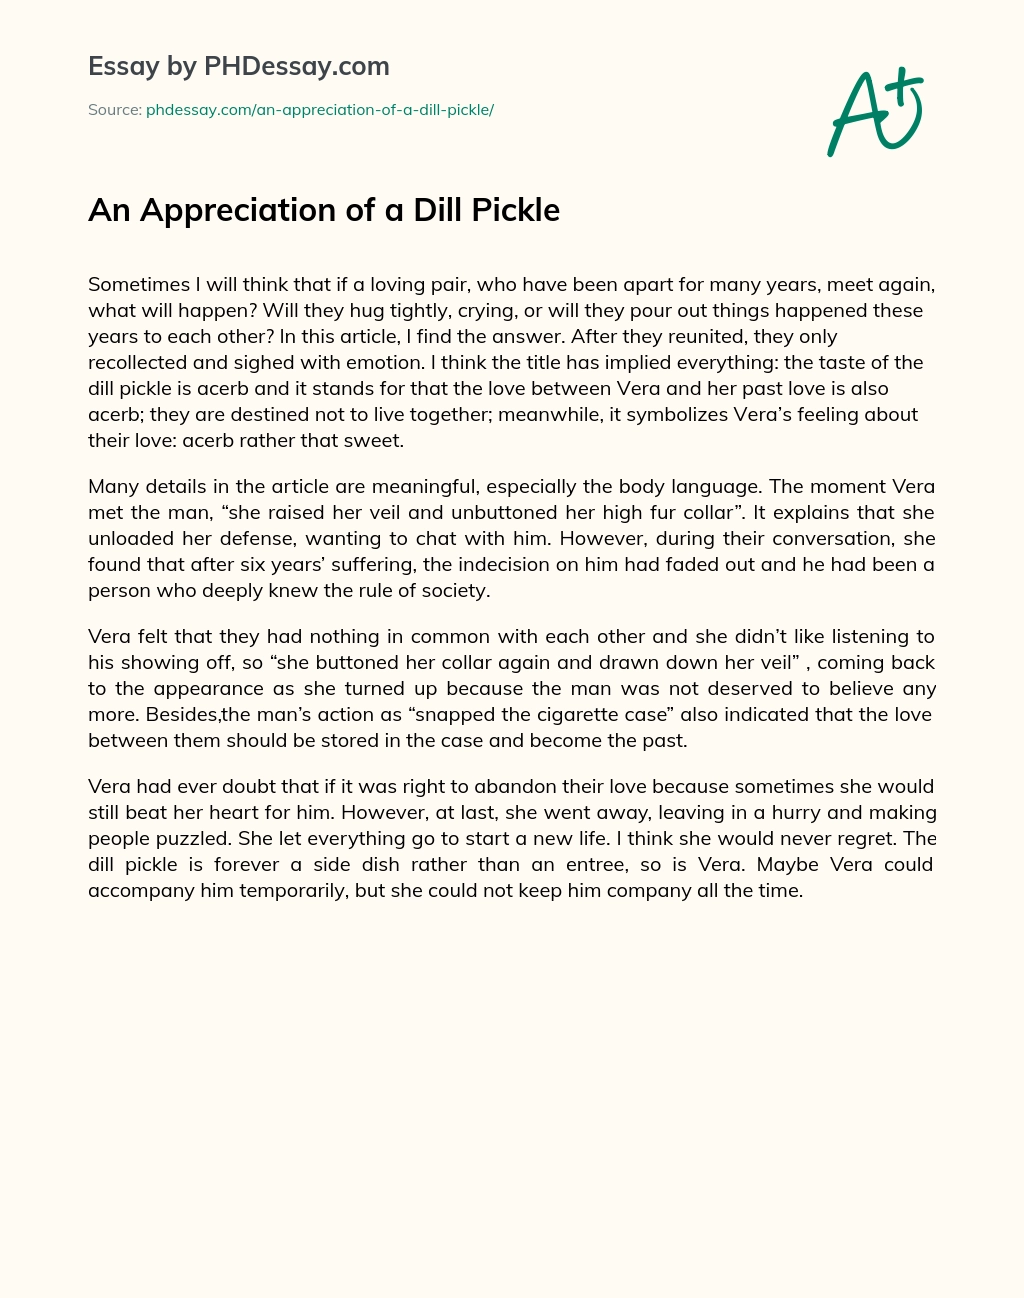 An Appreciation of a Dill Pickle essay